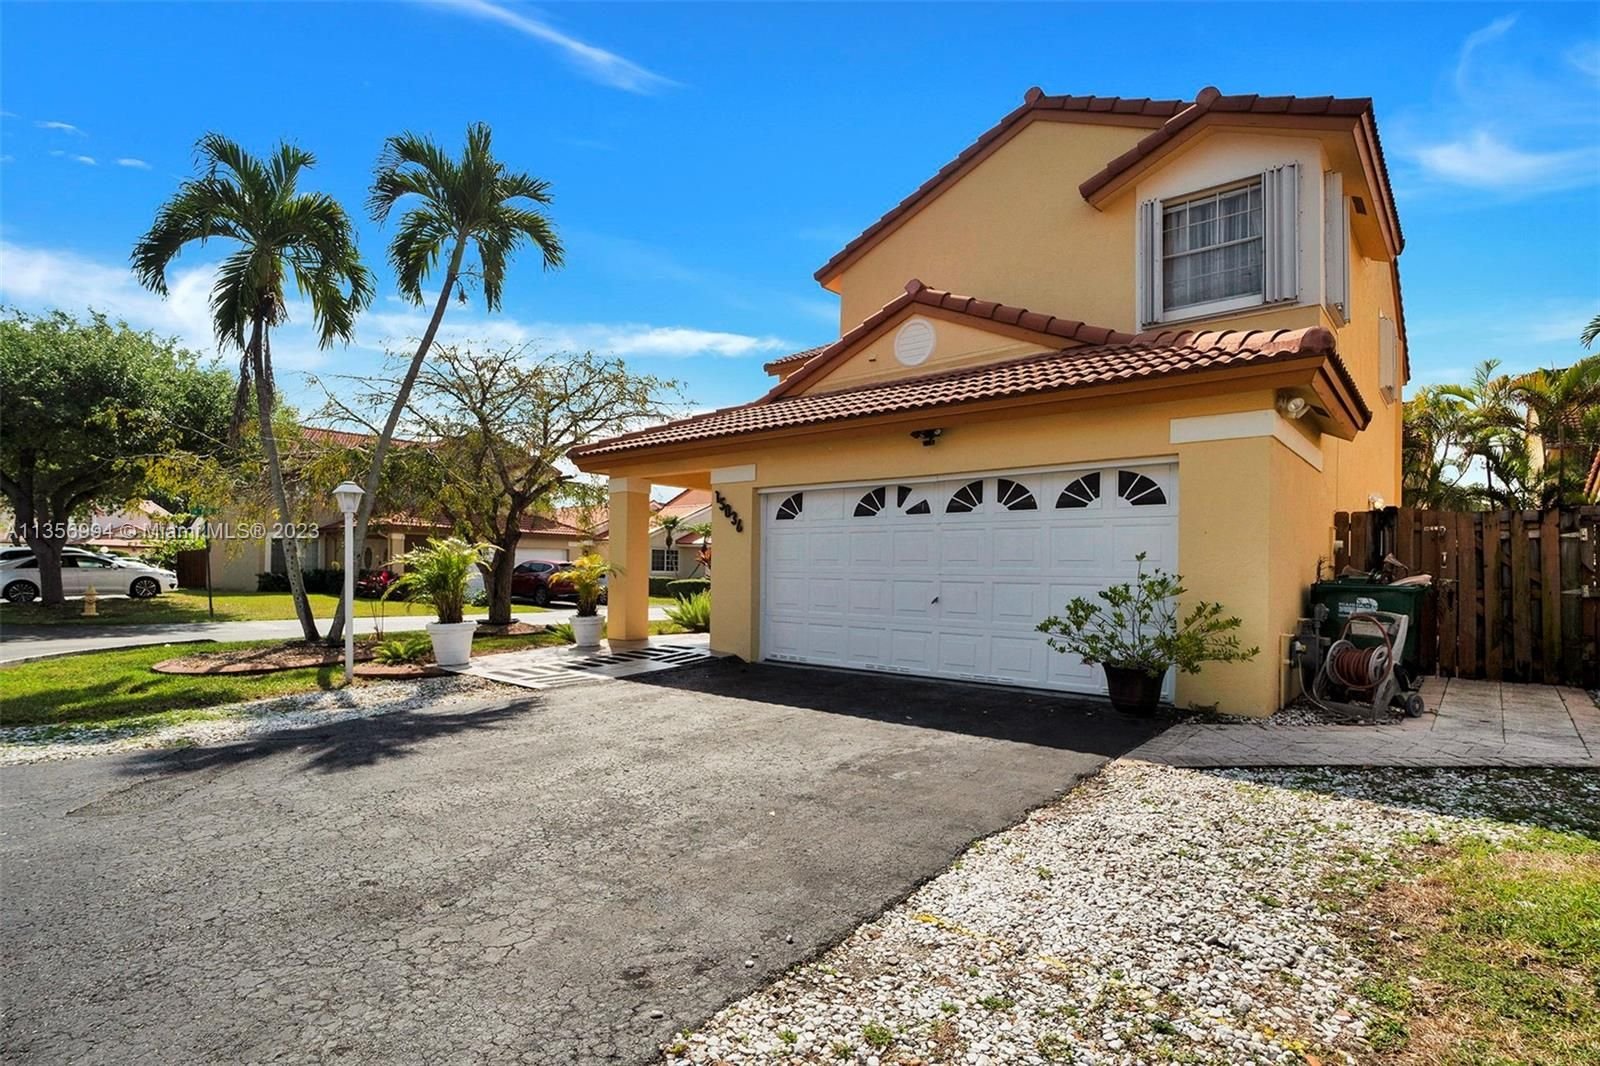 Real estate property located at 15036 108th Ter, Miami-Dade County, Miami, FL